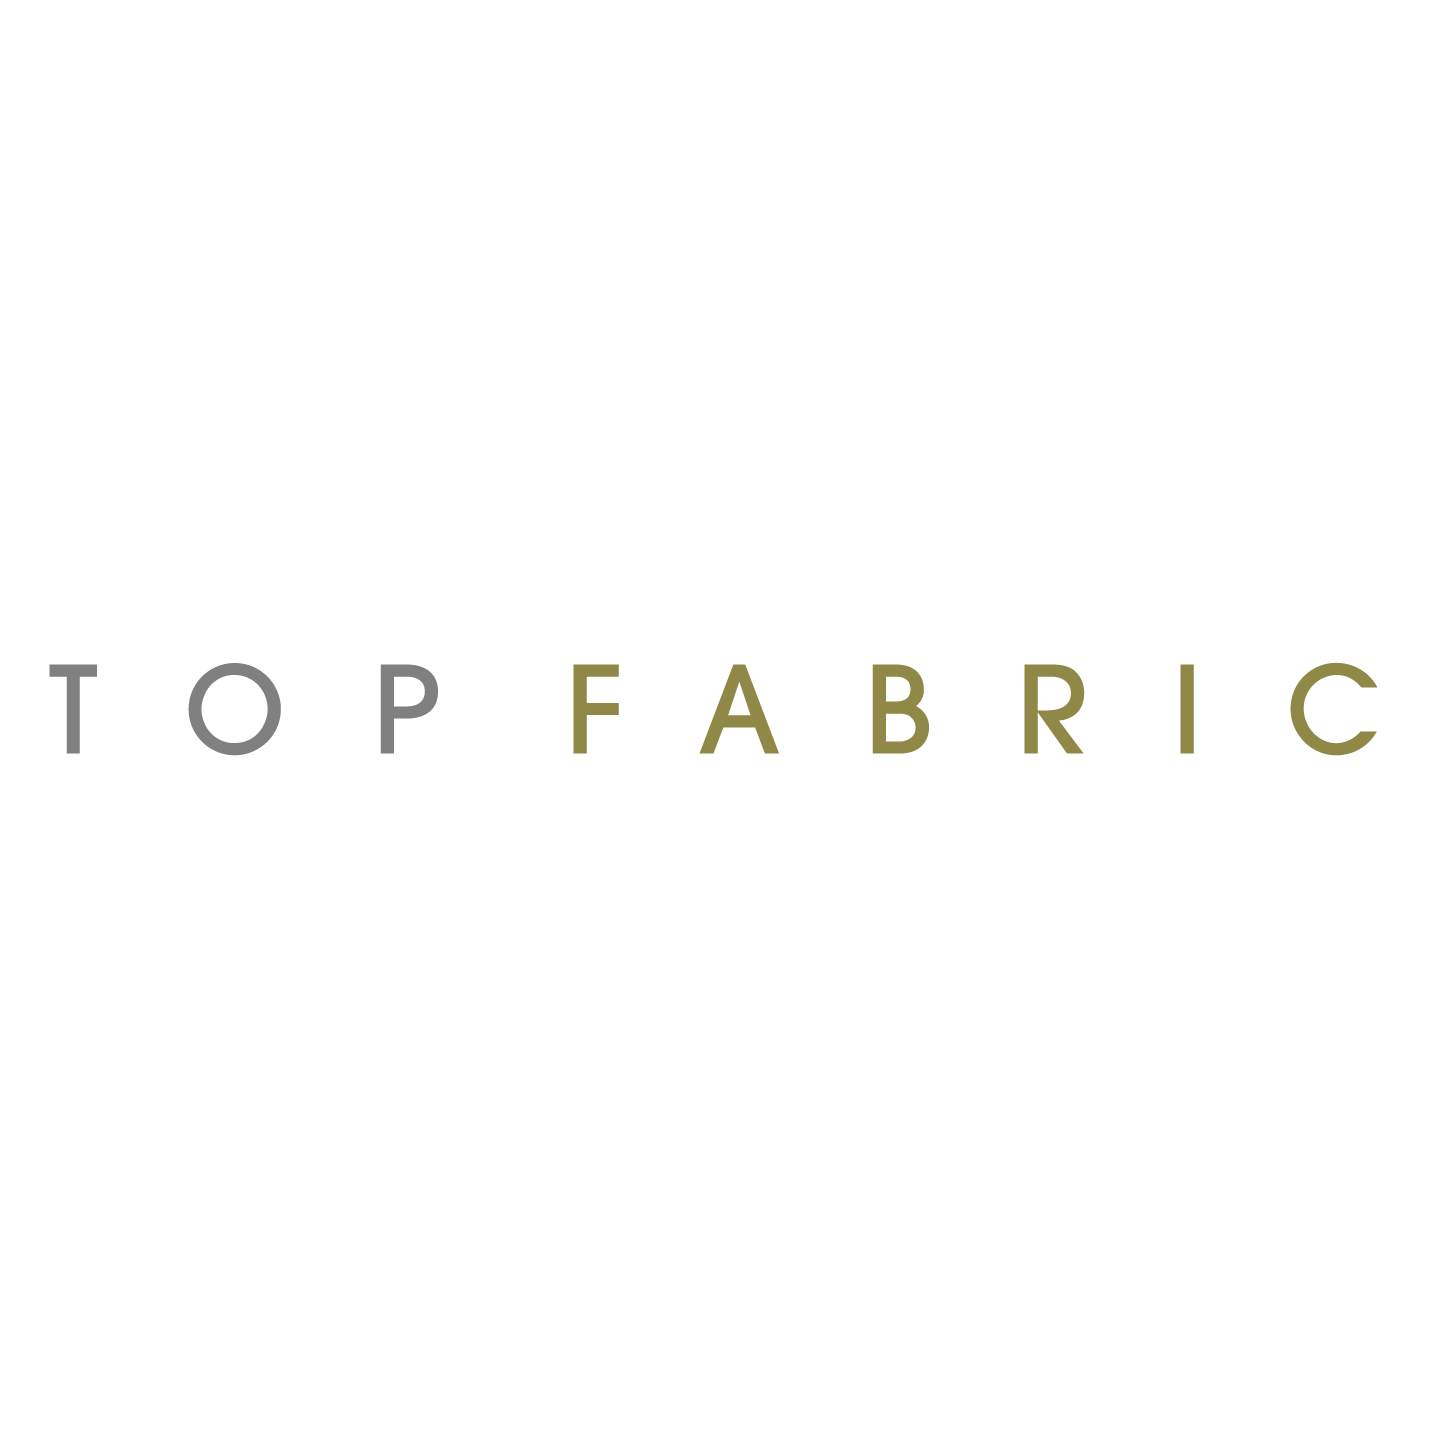 Buy fabric online - Sheer Silk Gauze - Black